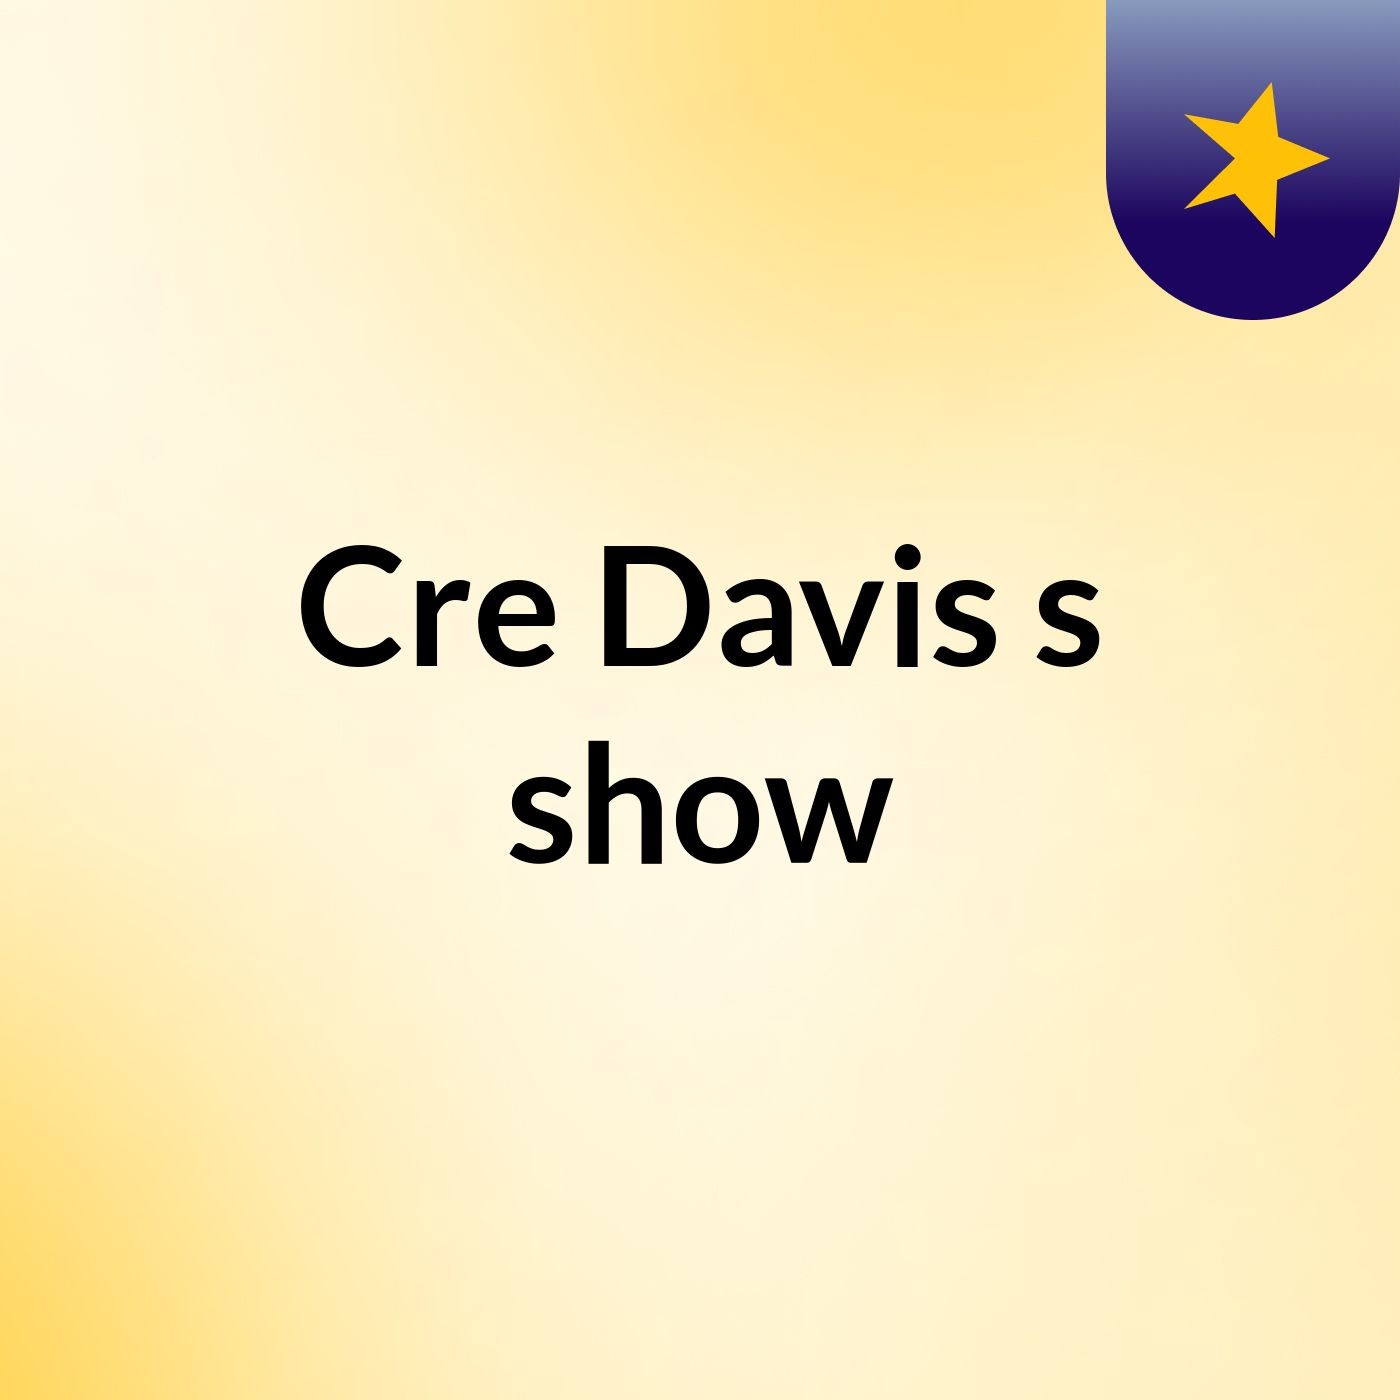 Cre Davis's show